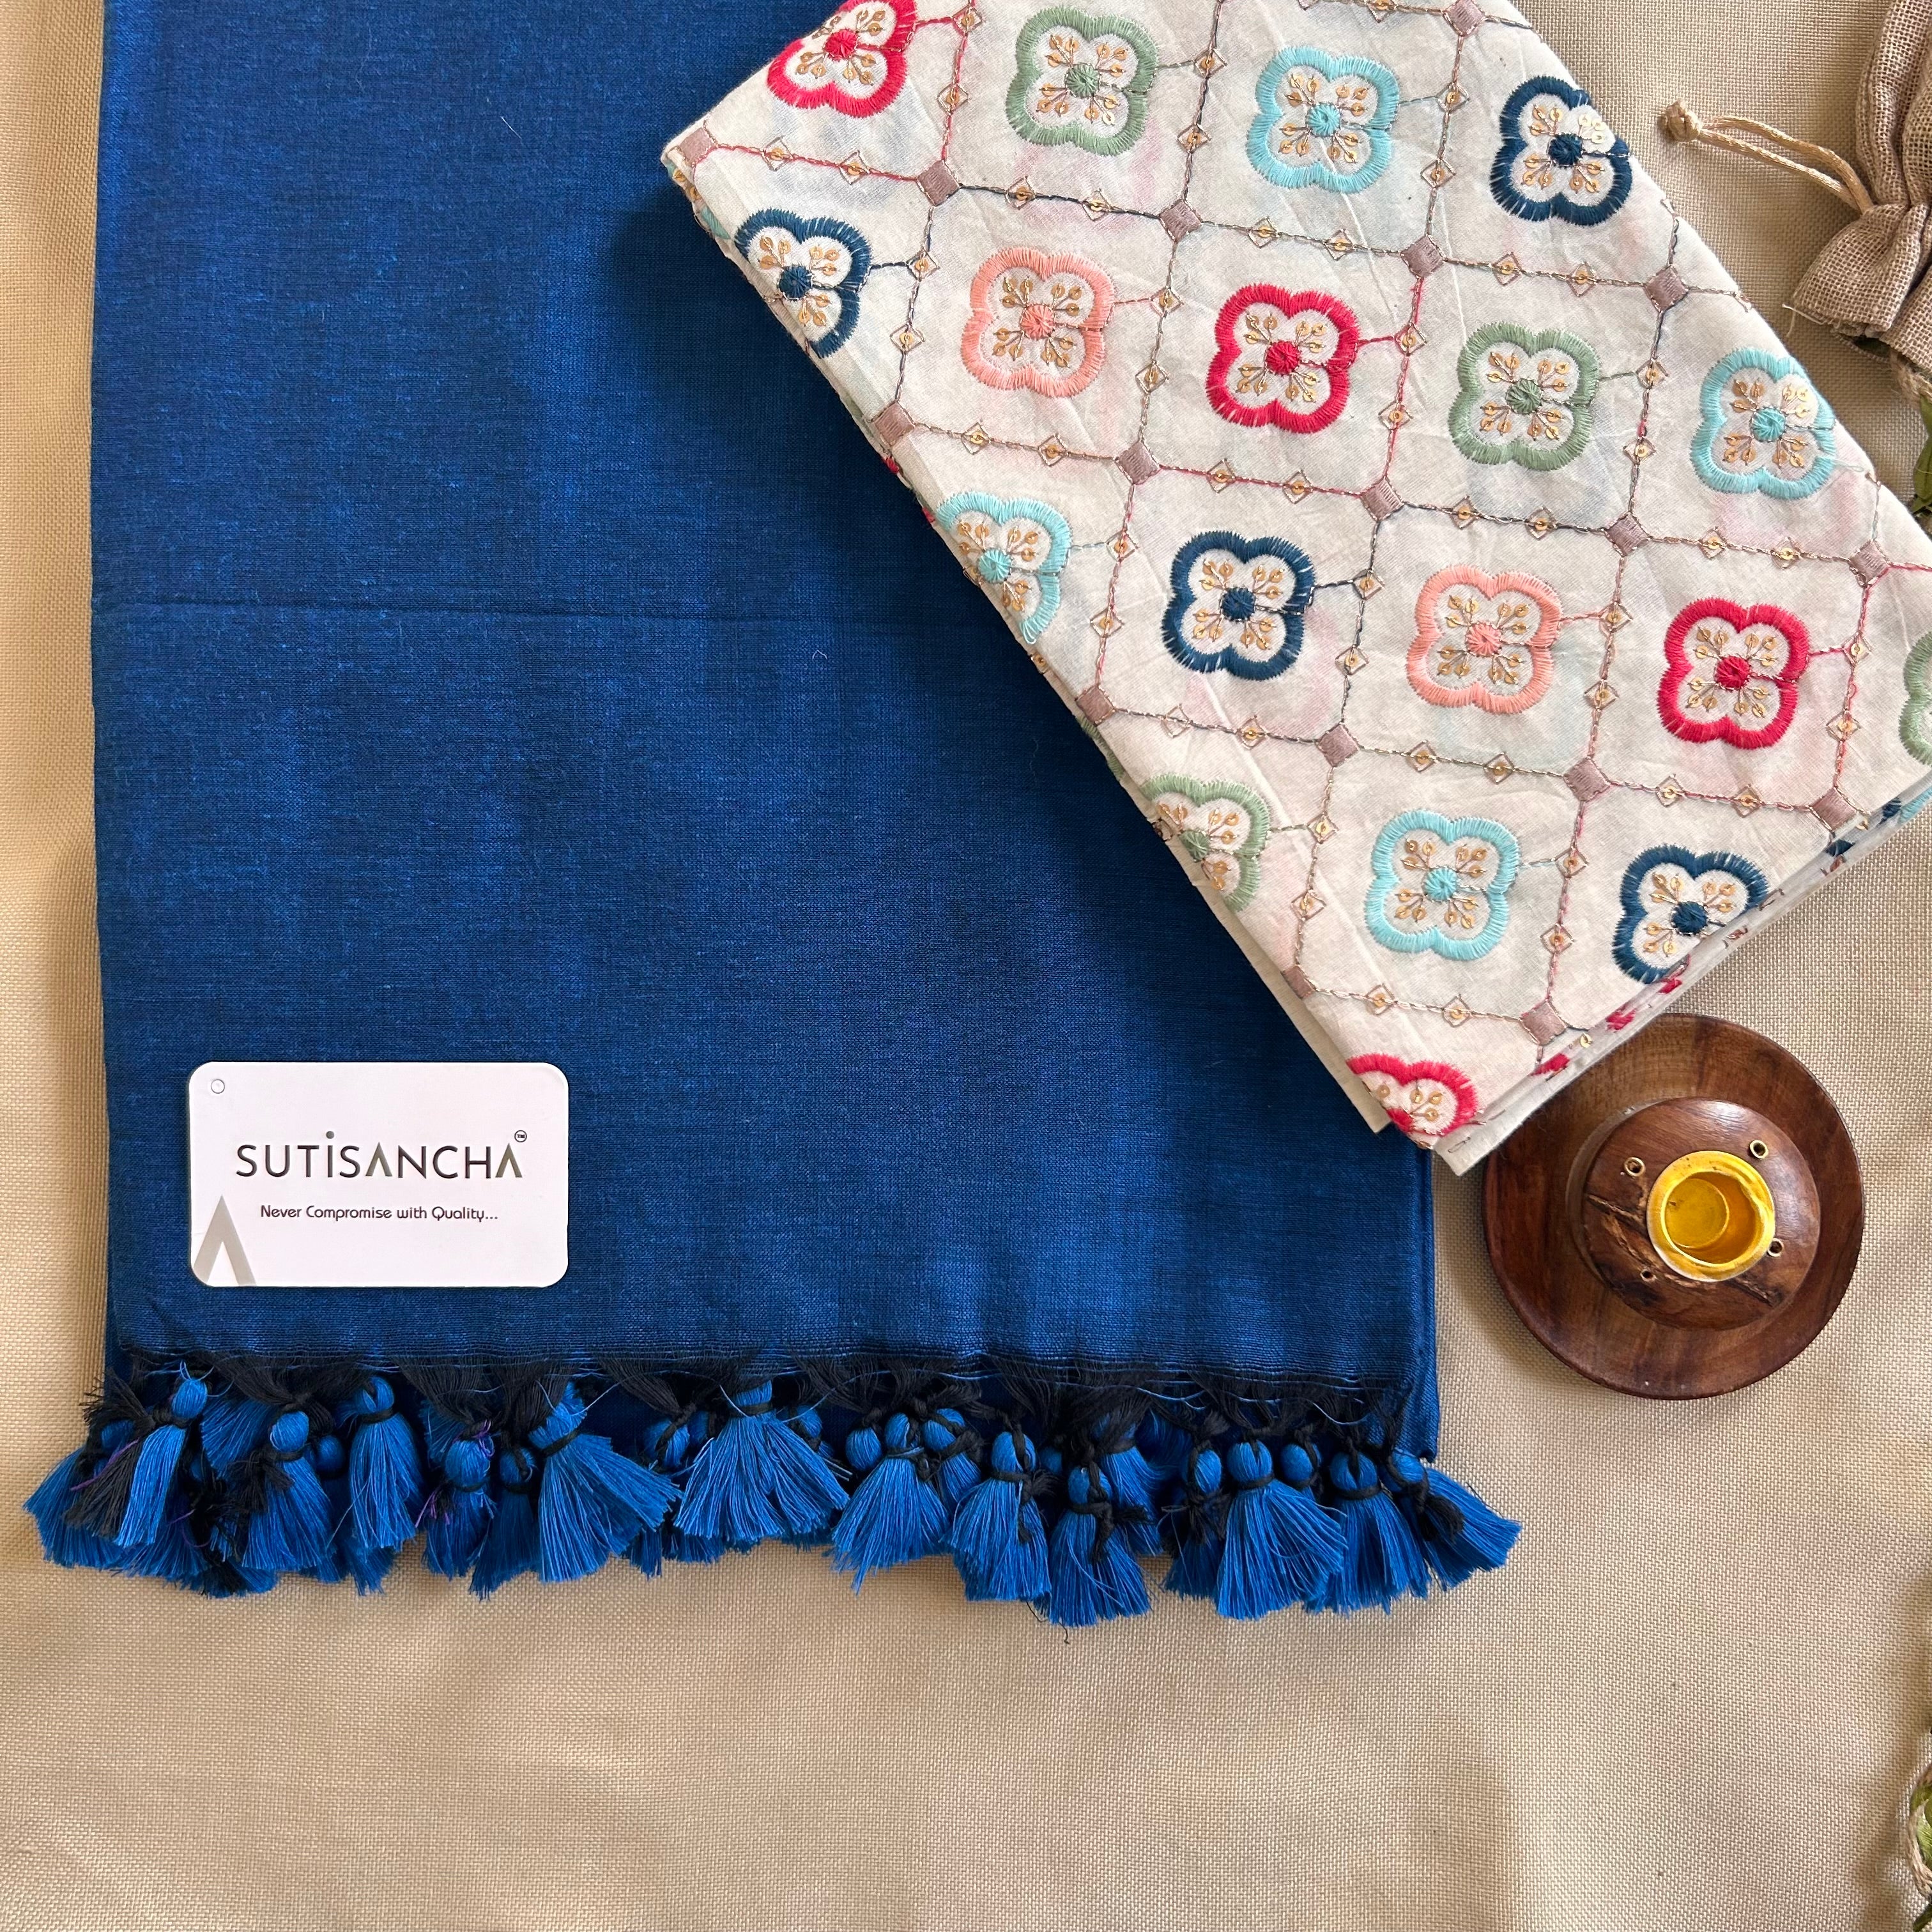 Sutisancha indigoBlue Handloom Cotton Saree with Designer Blouse